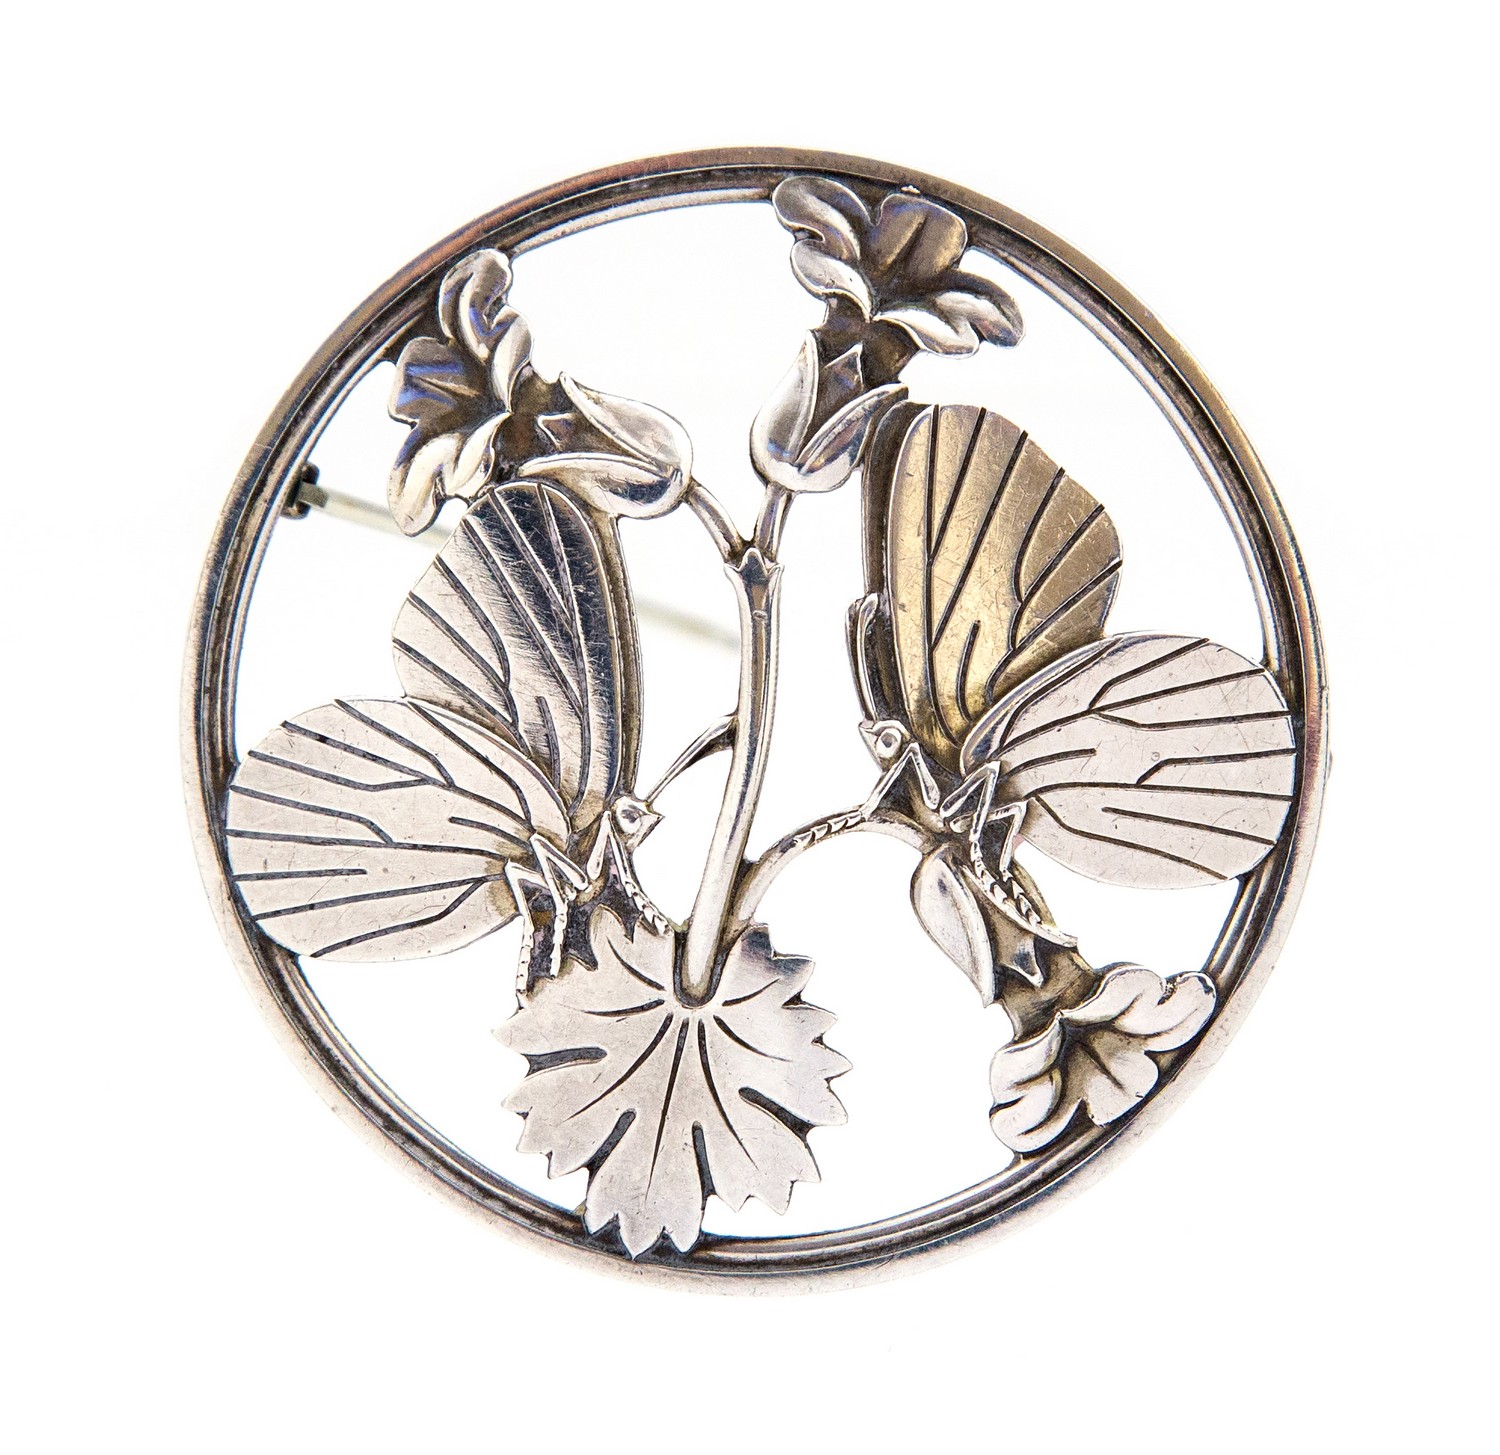 Arno Malinowski for Georg Jensen, Moonlight Blossom, a Danish Modernist silver brooch, number 283,